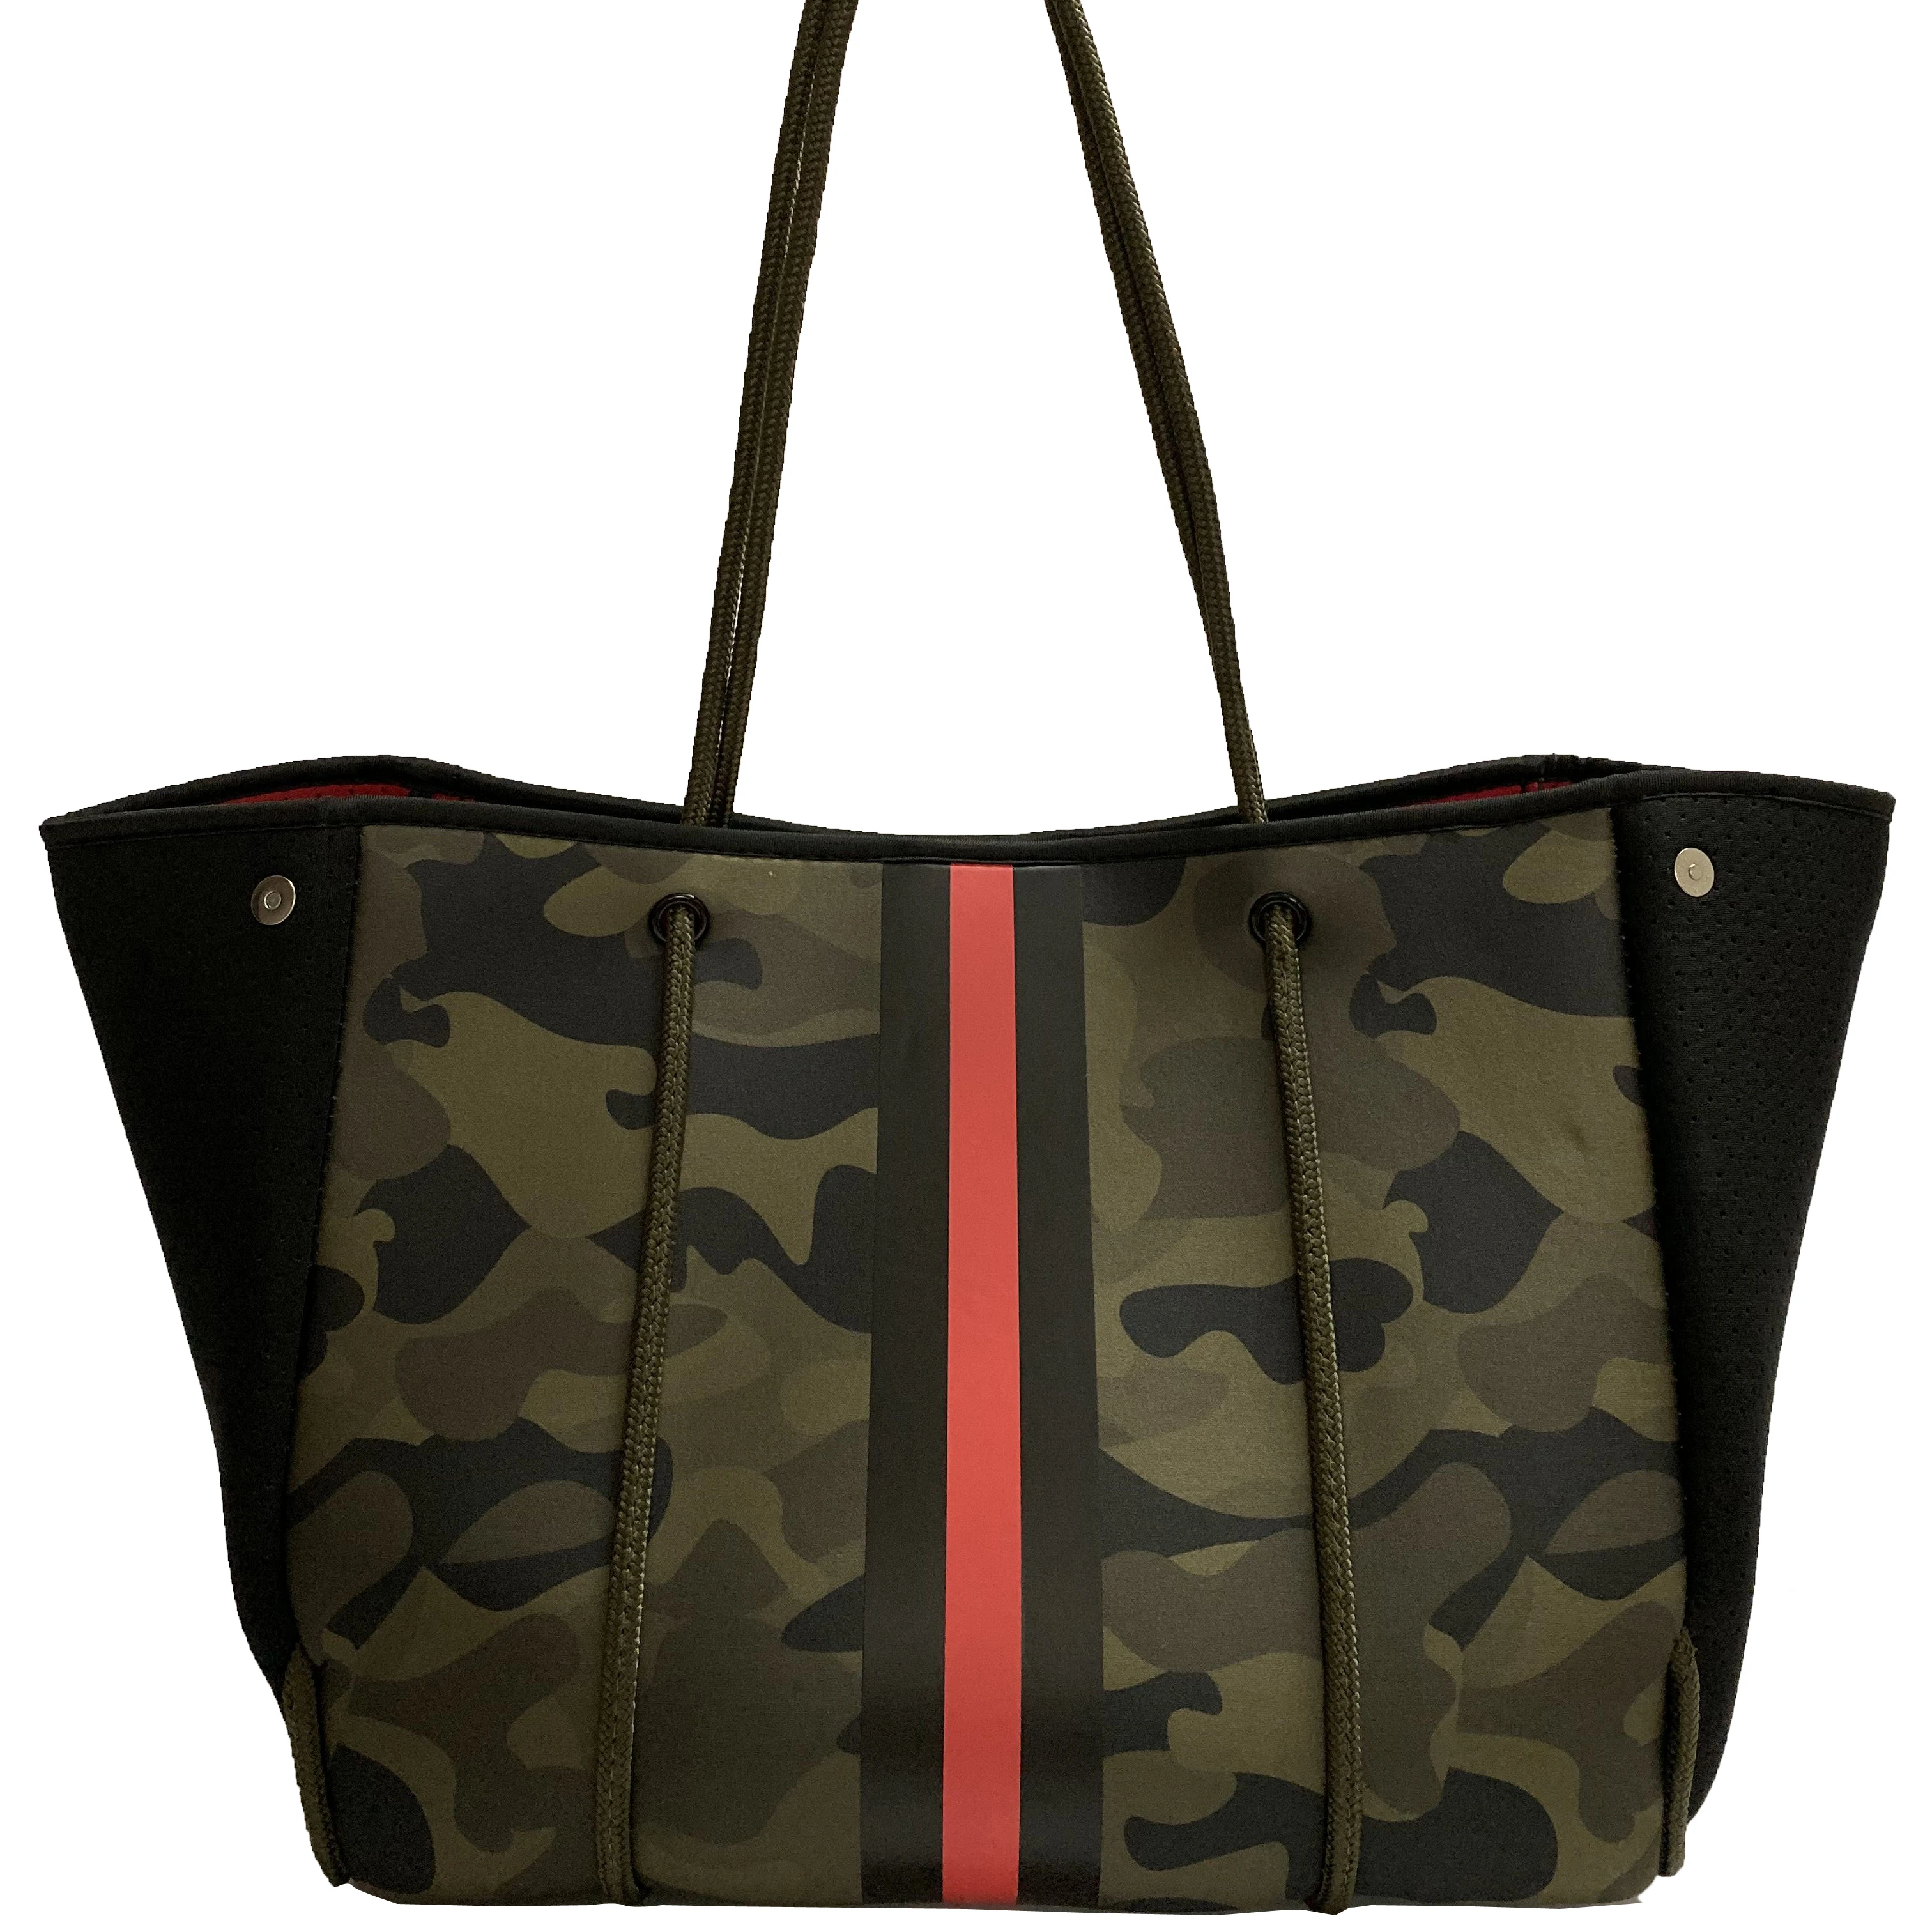 

2020 new green camouflage red stripe neoprene tote bag,neoprene beach tote bag, You choose